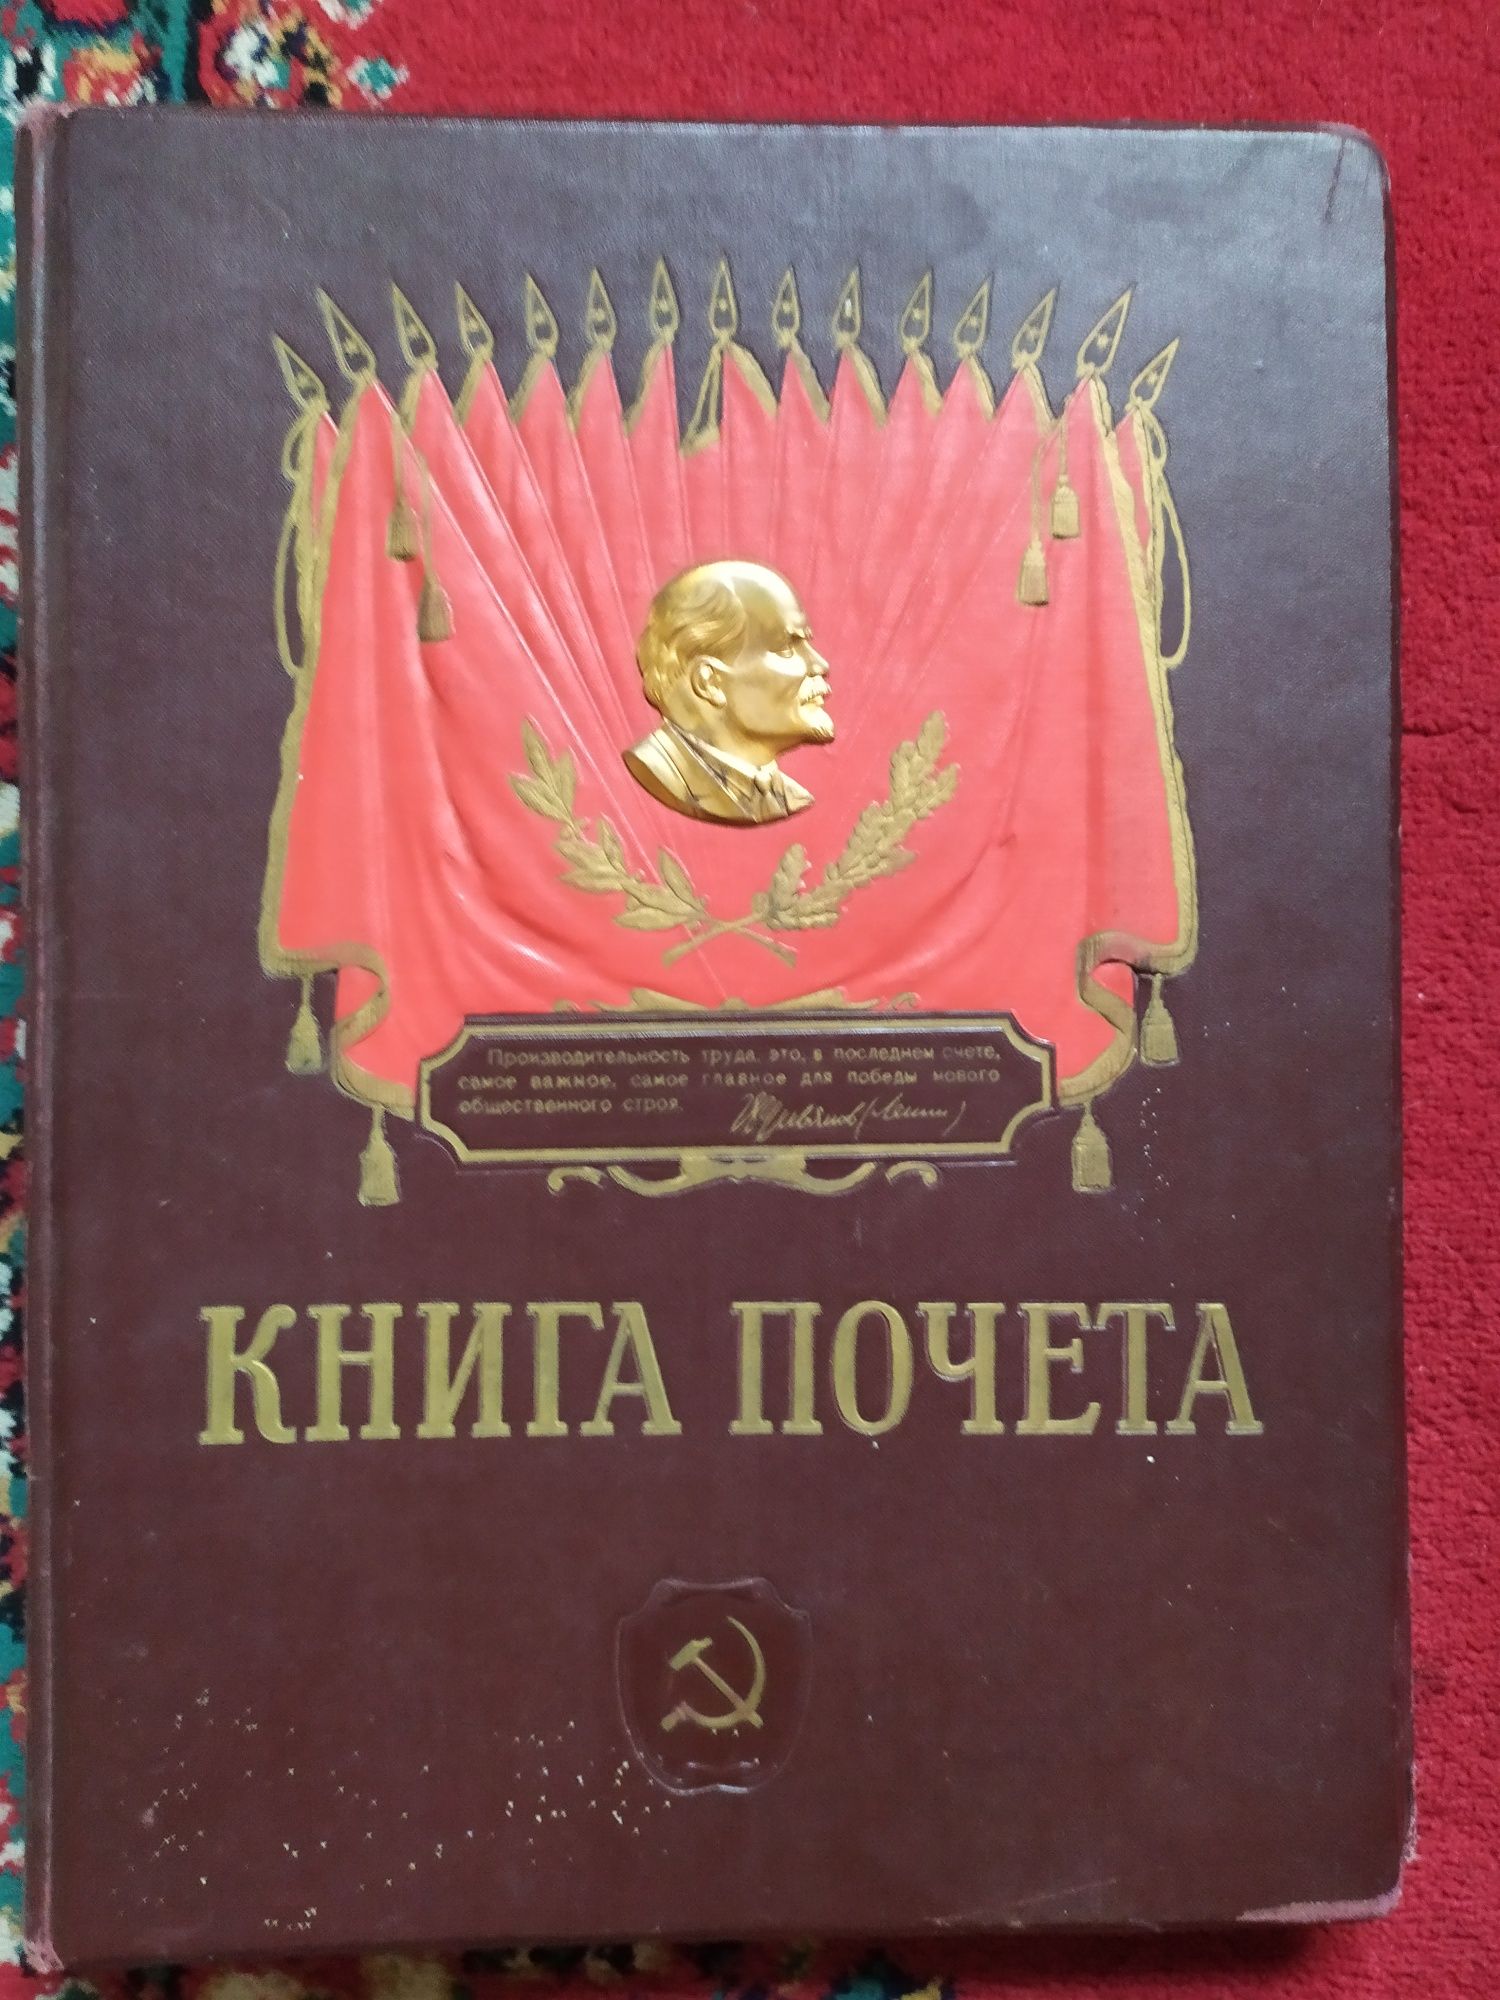 Книга почёта 1950-х годов.